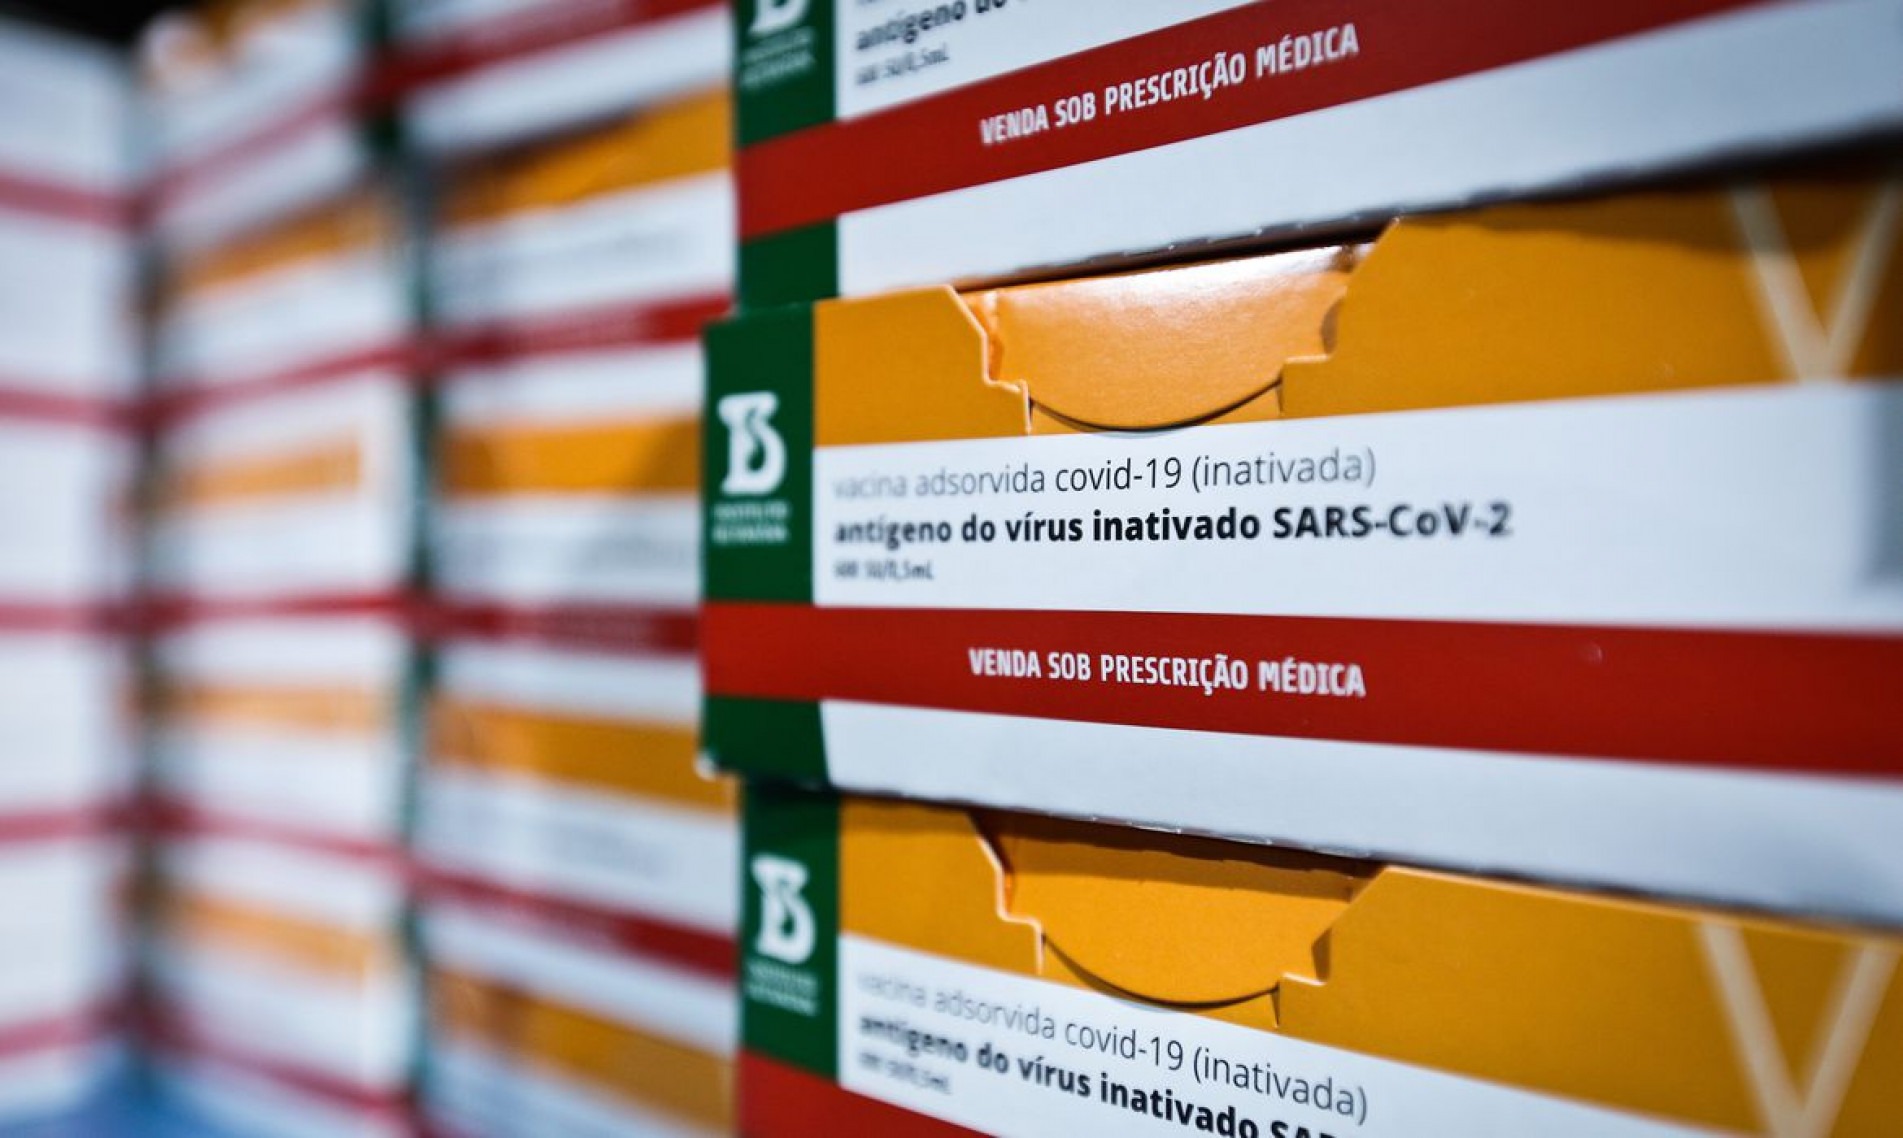  Chegada de 59.800 doses da vacina CoronaVac (17.03.2021).Foto: Breno Esaki/Ag..ncia Sa..de DF
    